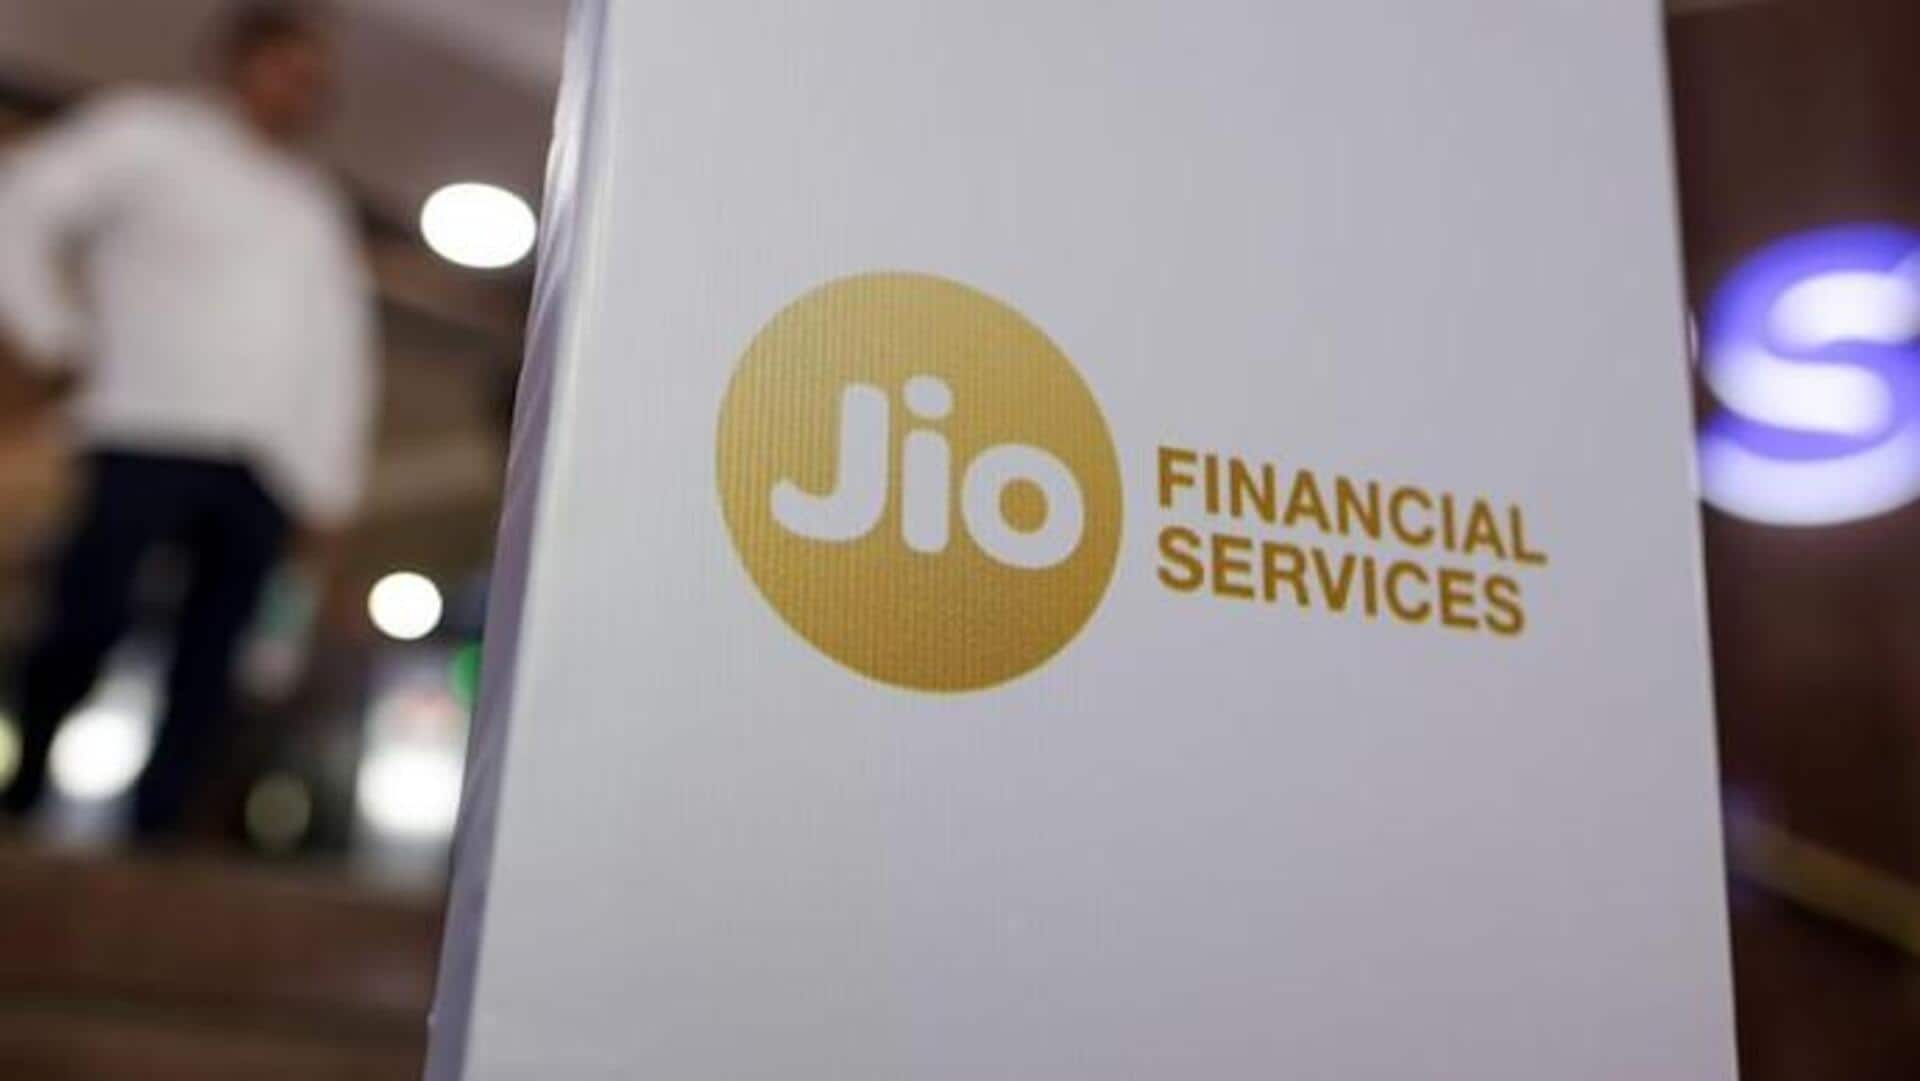 Jio Financial Services aims to raise Rs. 10,000cr via bonds